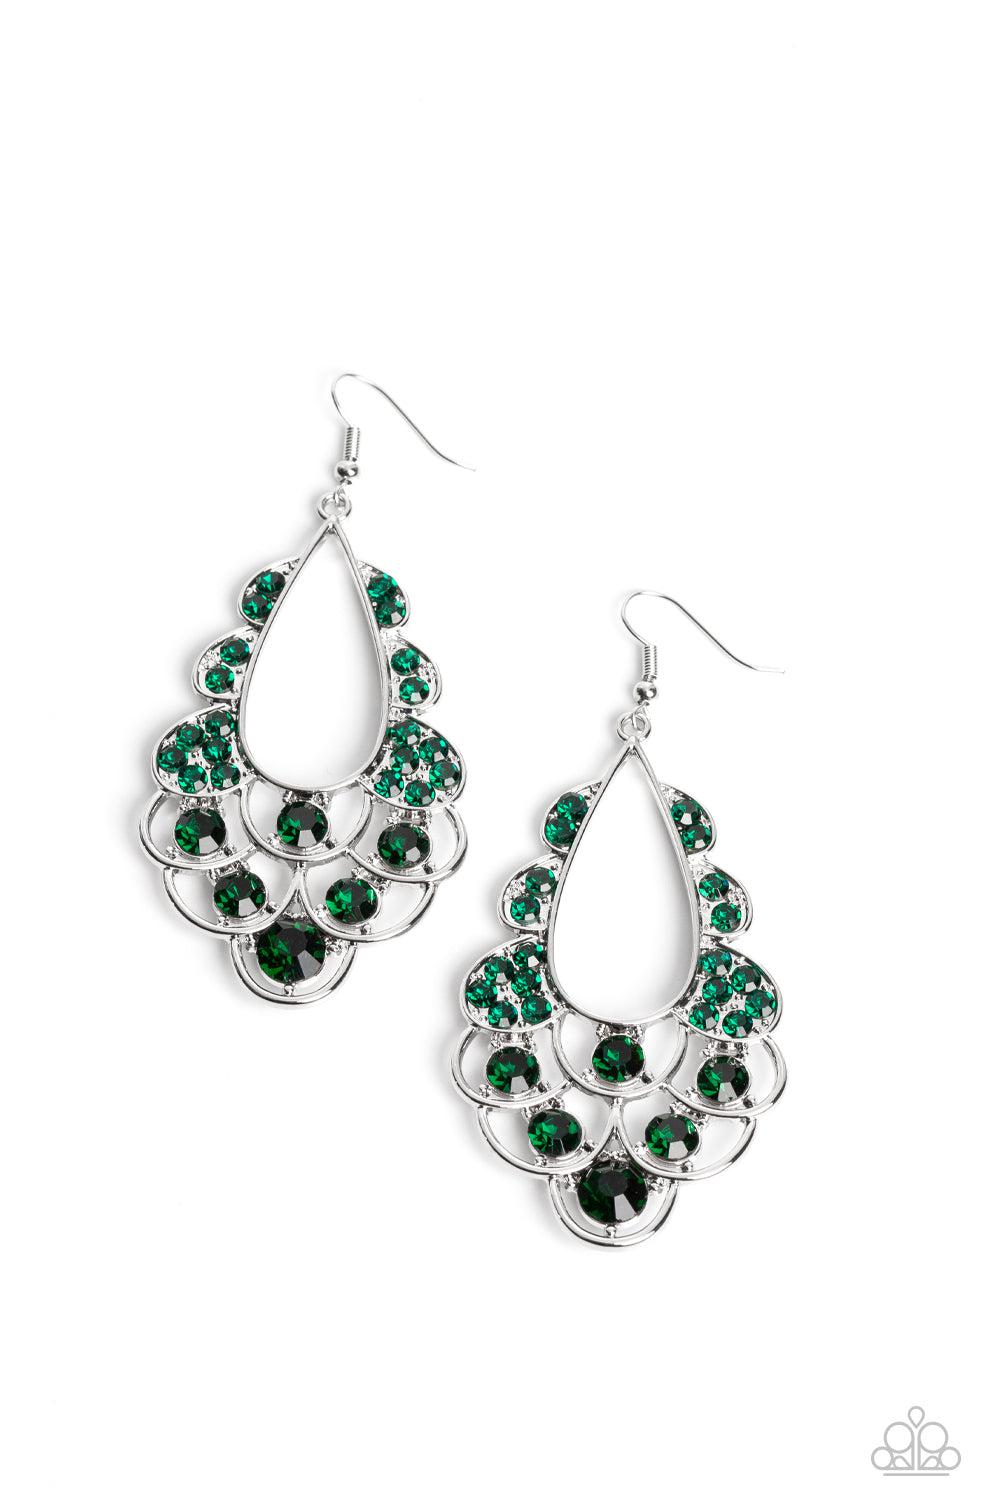 Majestic Masquerade Green Rhinestone Earrings - Paparazzi Accessories- lightbox - CarasShop.com - $5 Jewelry by Cara Jewels